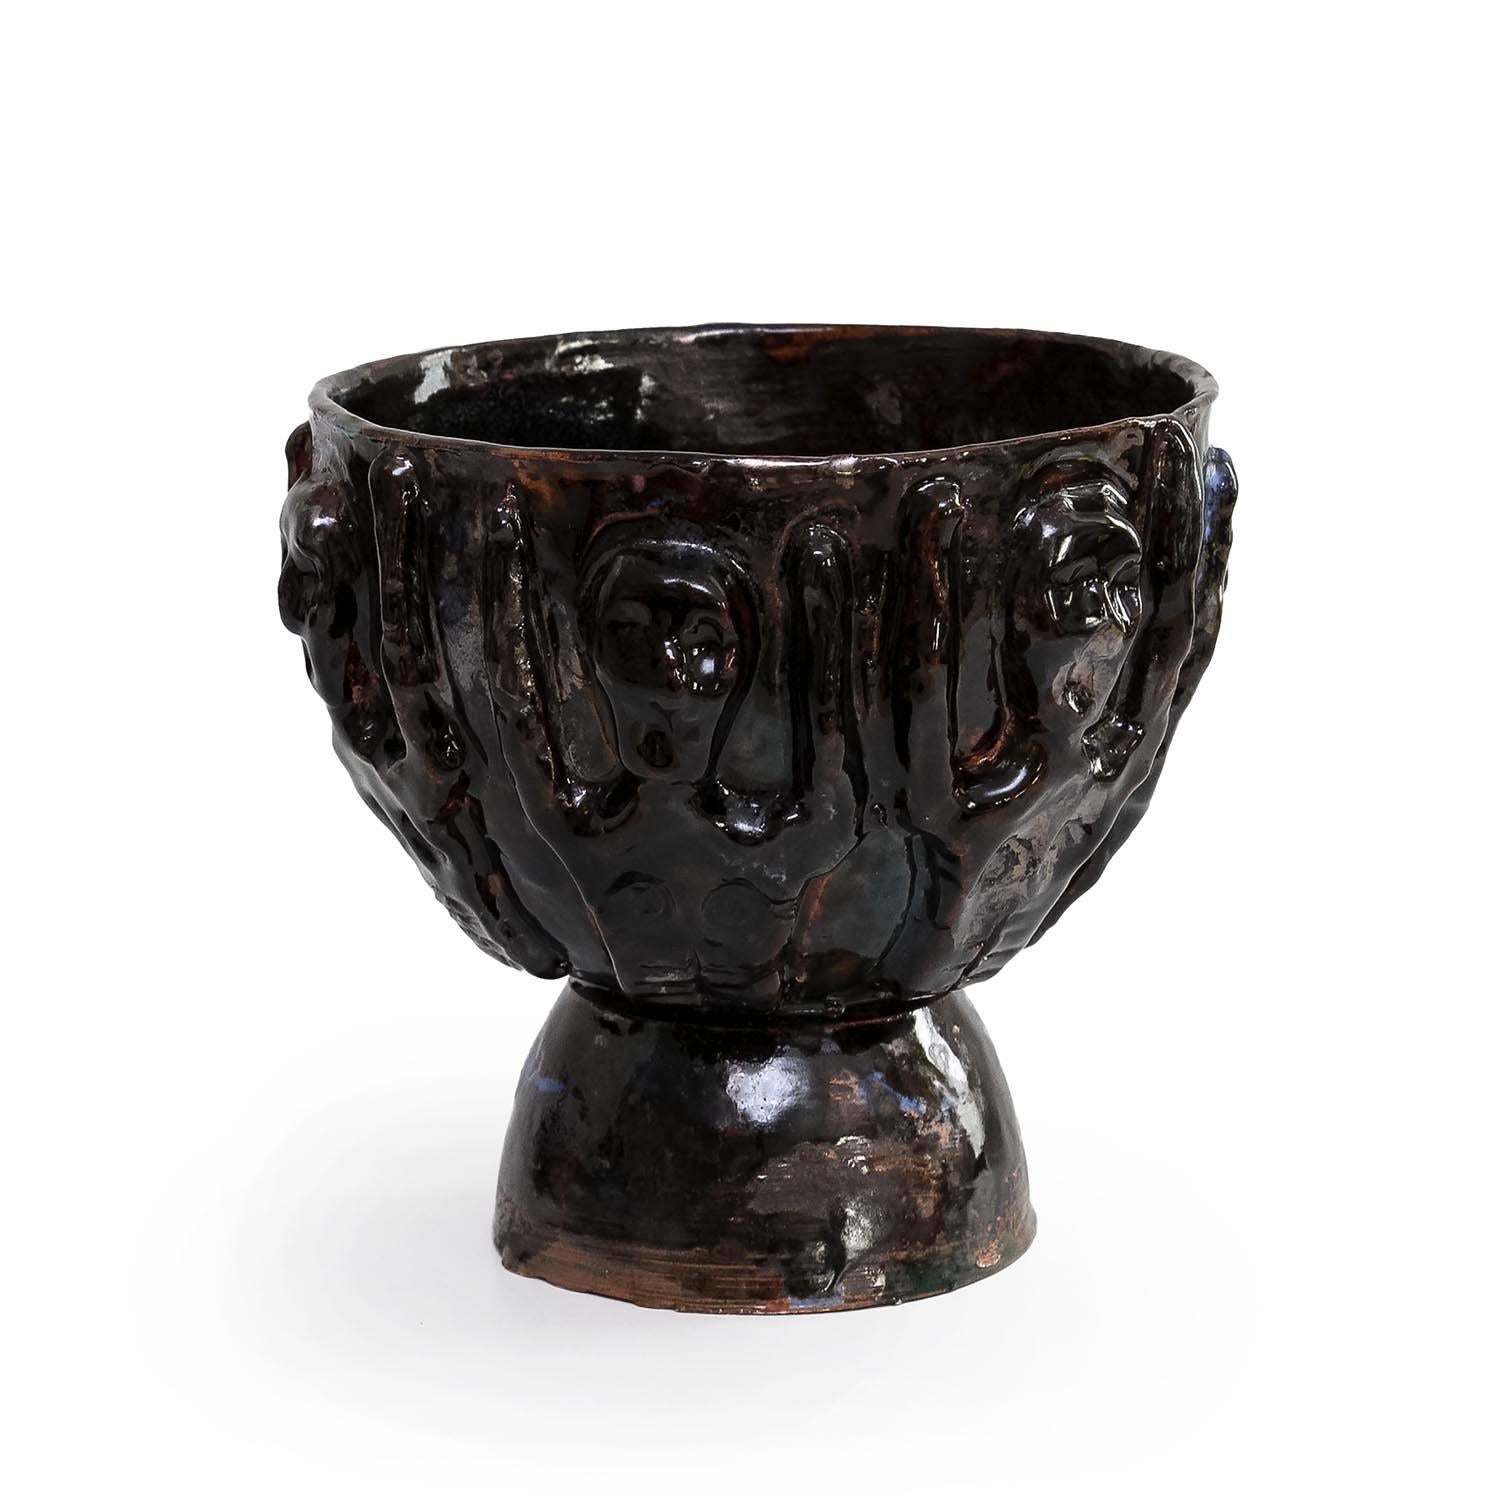 Beatrice Wood
Figurative Vessel (INV# NP4056)
stoneware and glaze
5.75 x 6.25"
signed